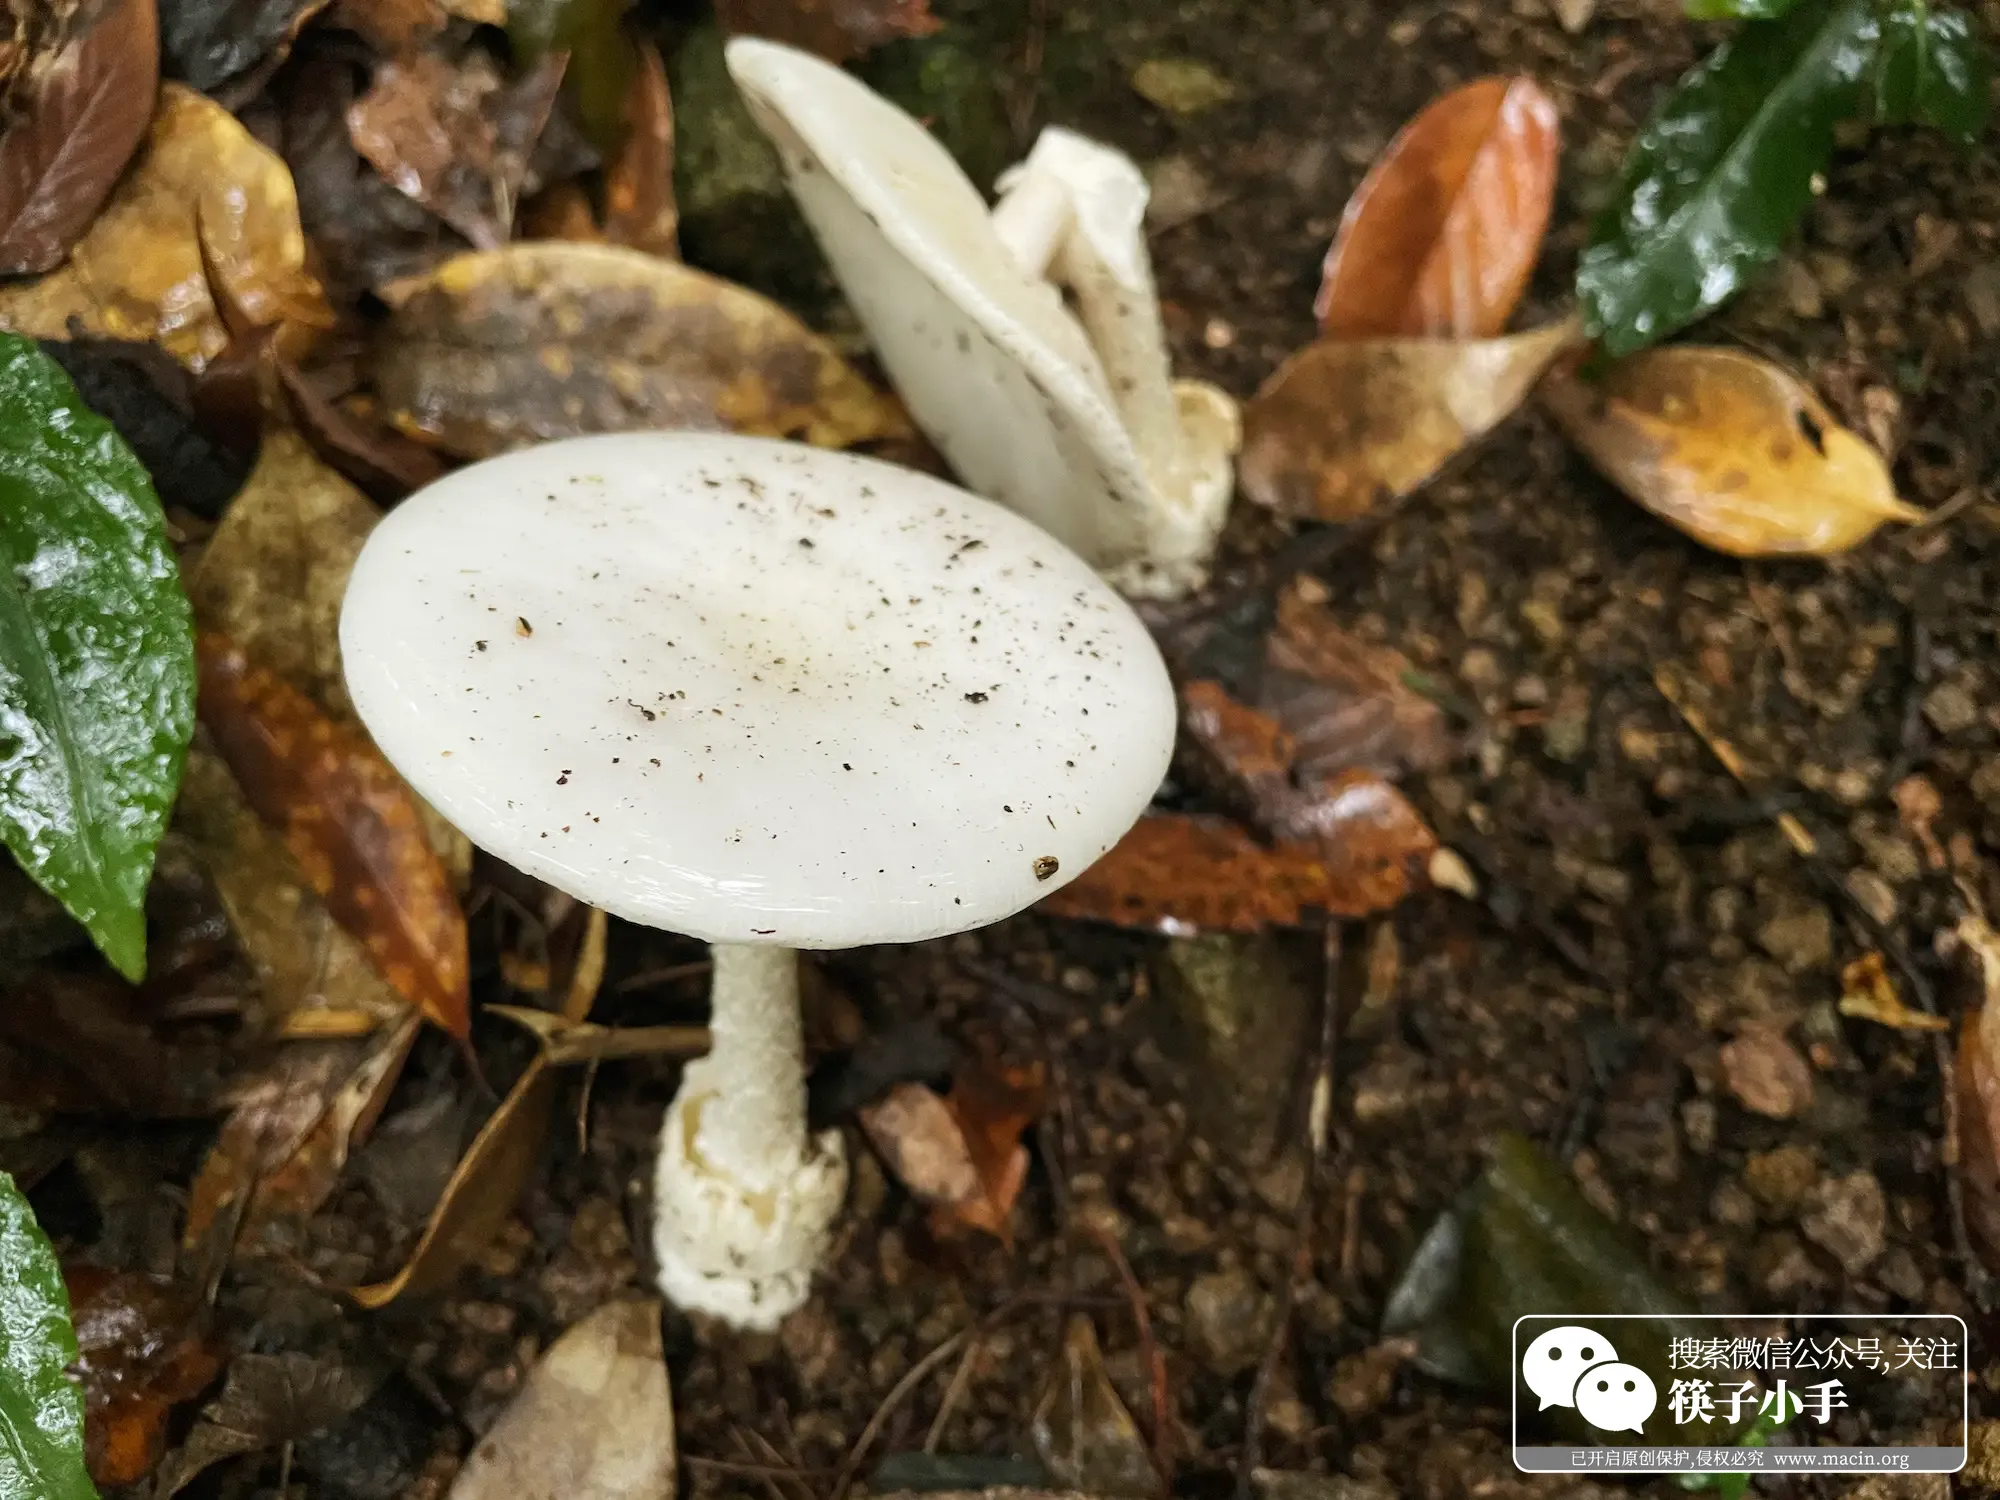 Mushrooms after the rain